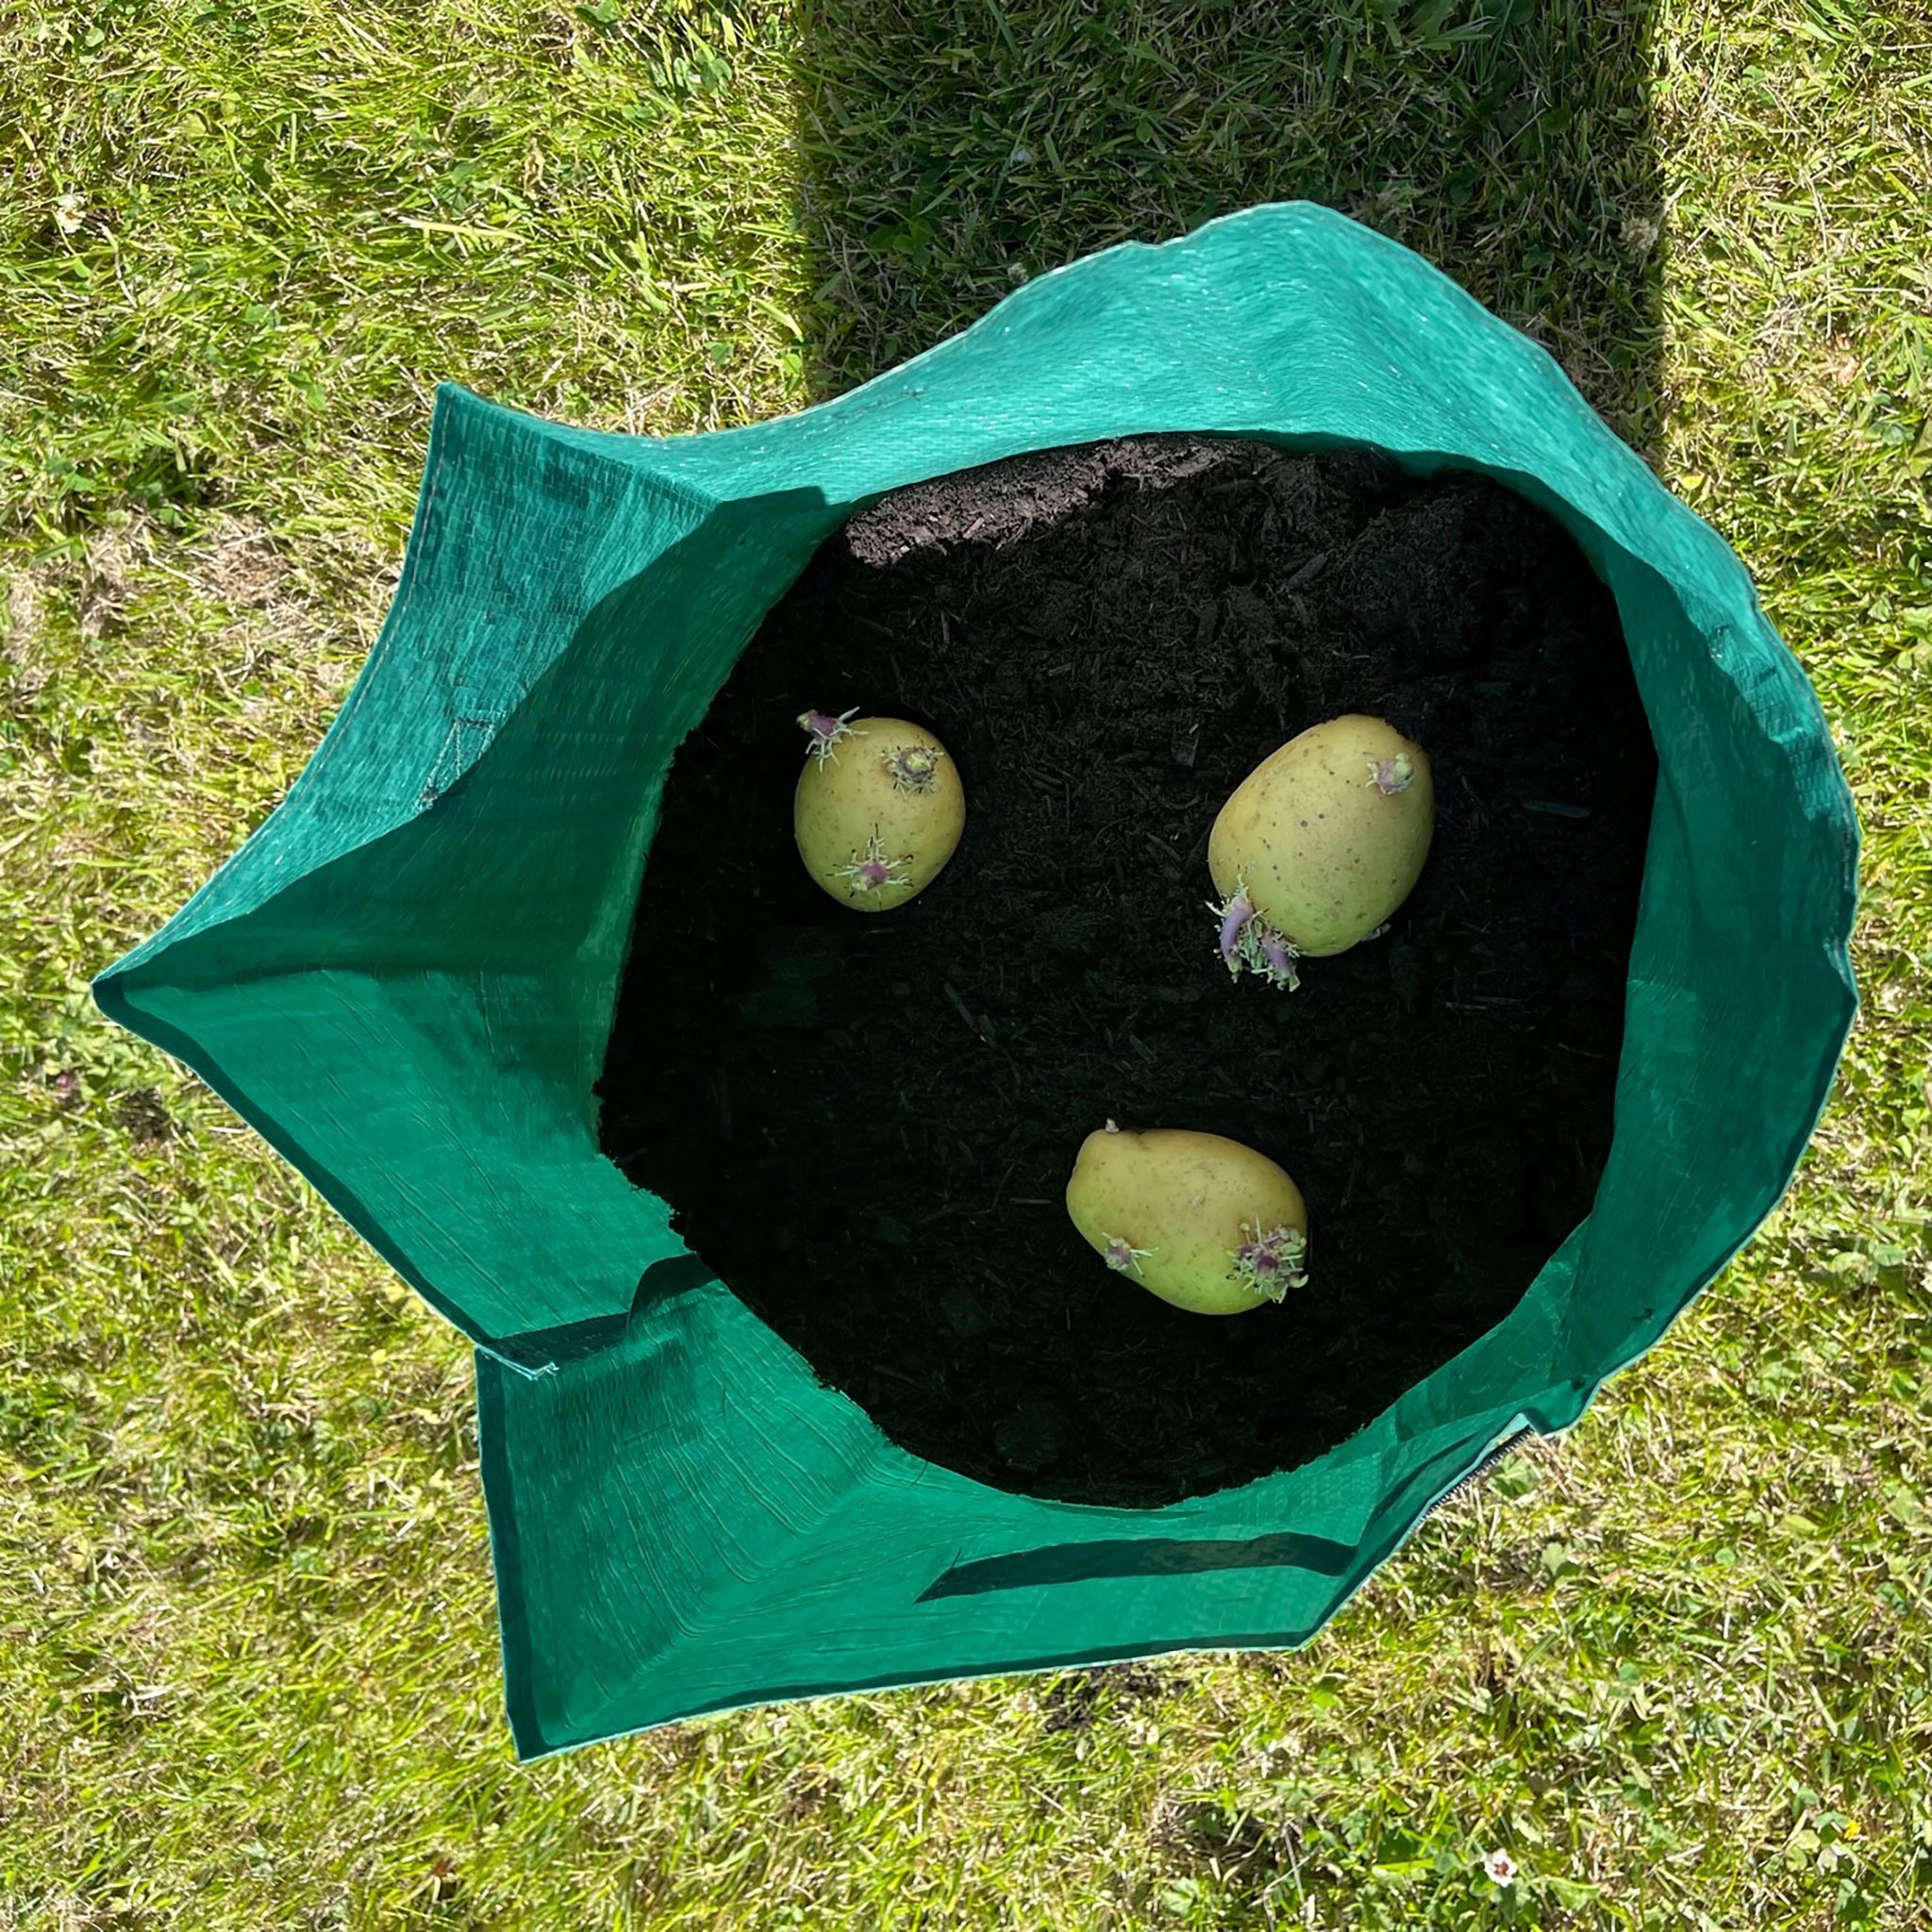 Potato growing sack